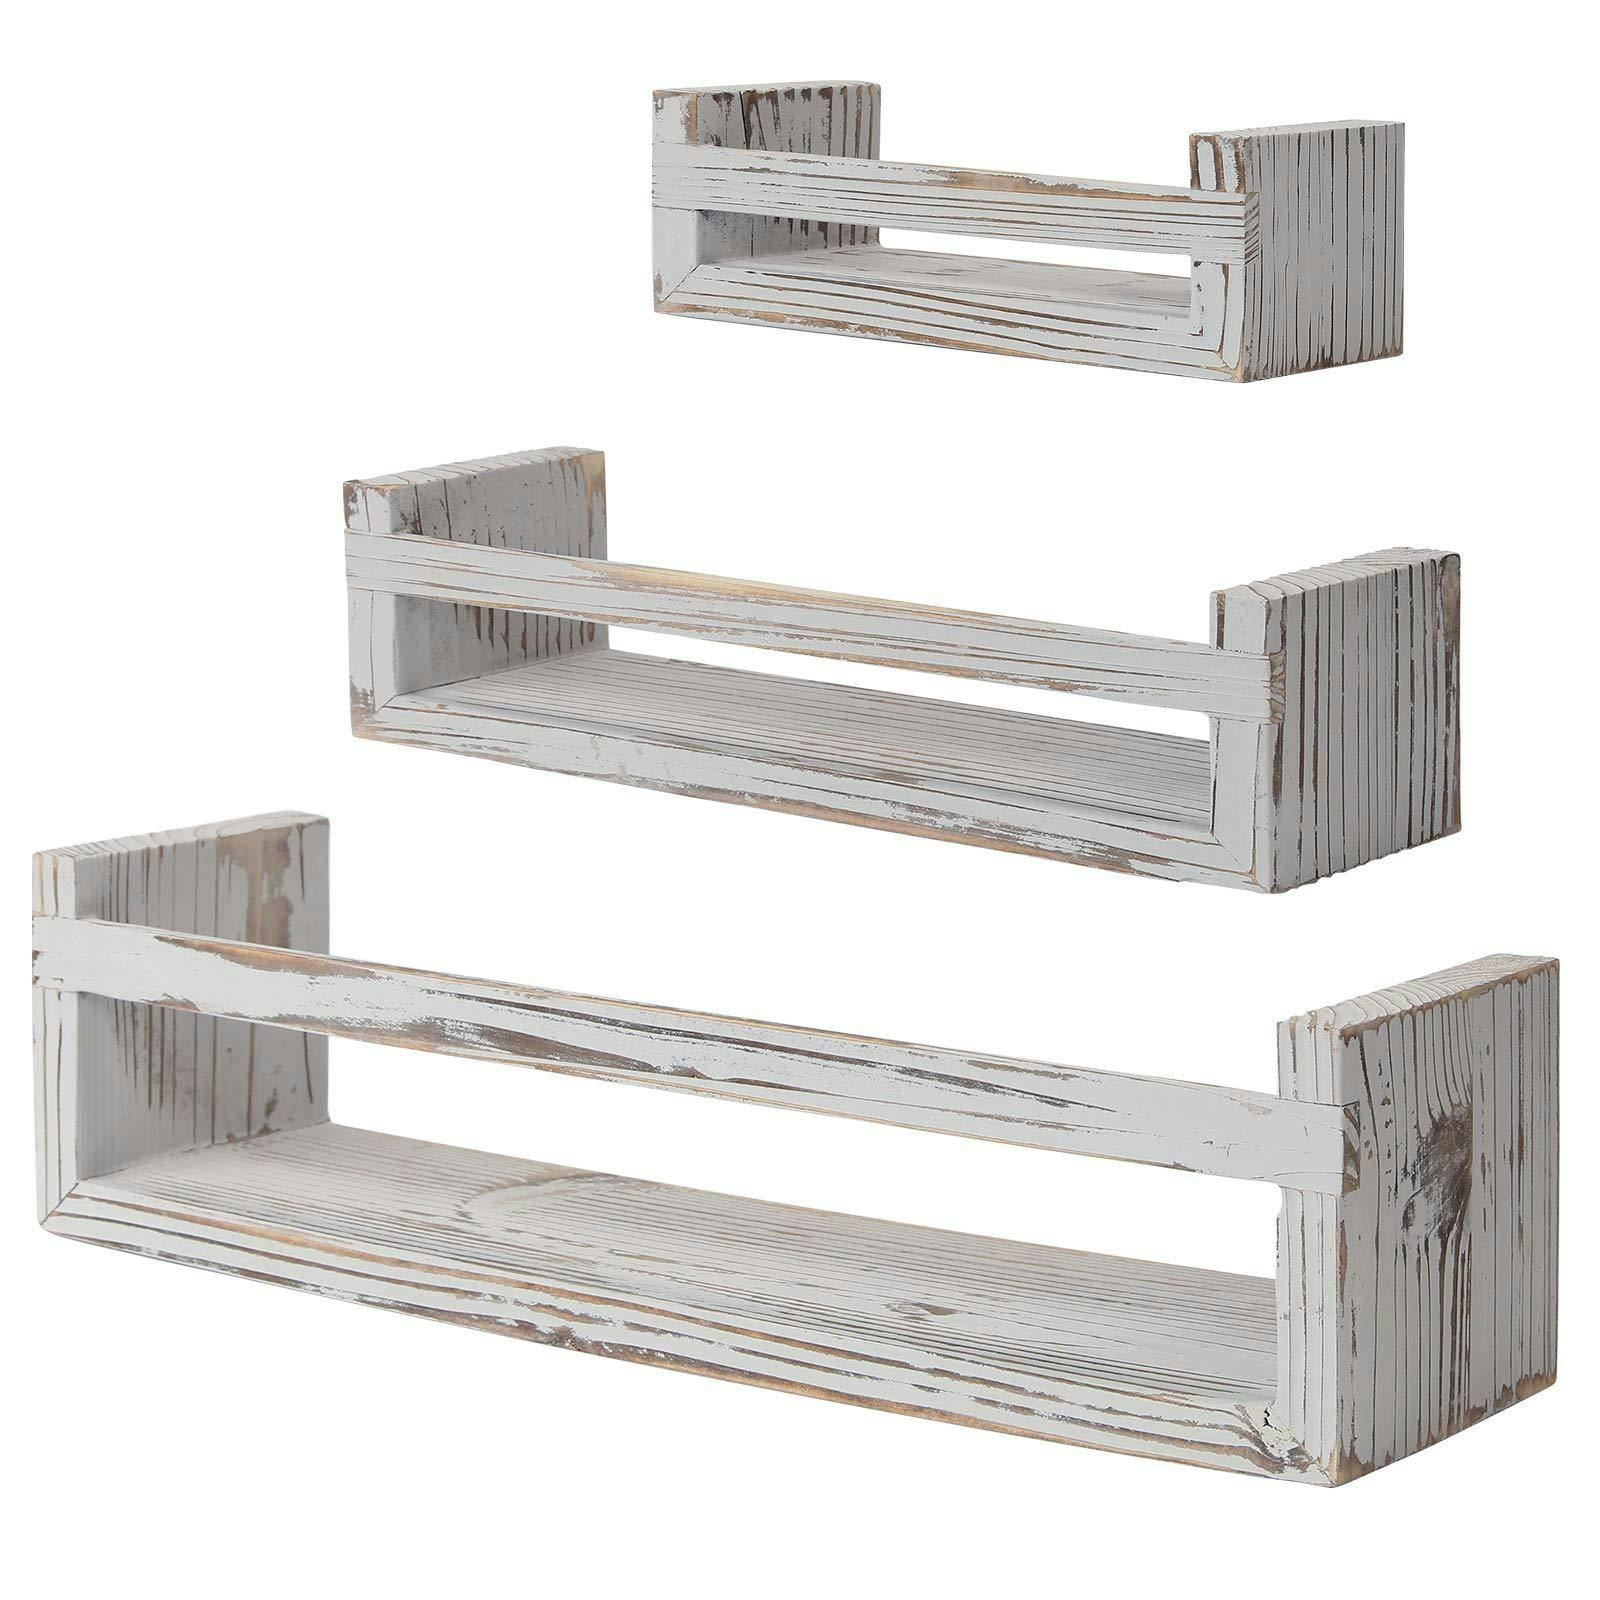 Rustic White U-Shape Floating Shelves - 3 Piece Set for Versatile Display